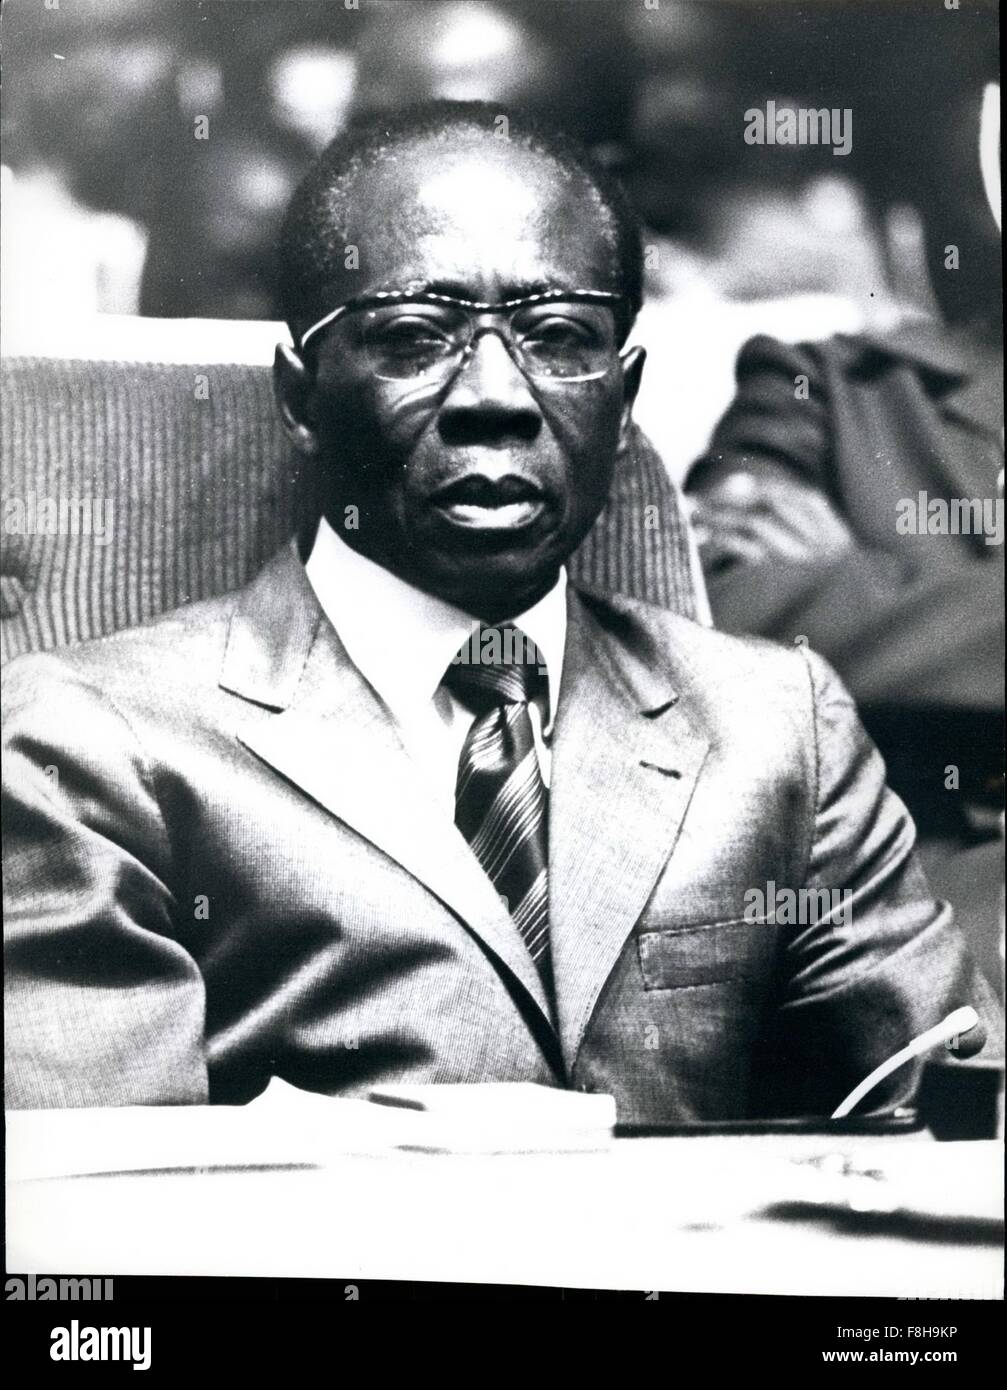 1973 - Leopold Sedar Senghor, President of Senegal since September 5, 1960. Born October 9, 1906. Credit: Camerapix © Keystone Pictures USA/ZUMAPRESS.com/Alamy Live News Stock Photo